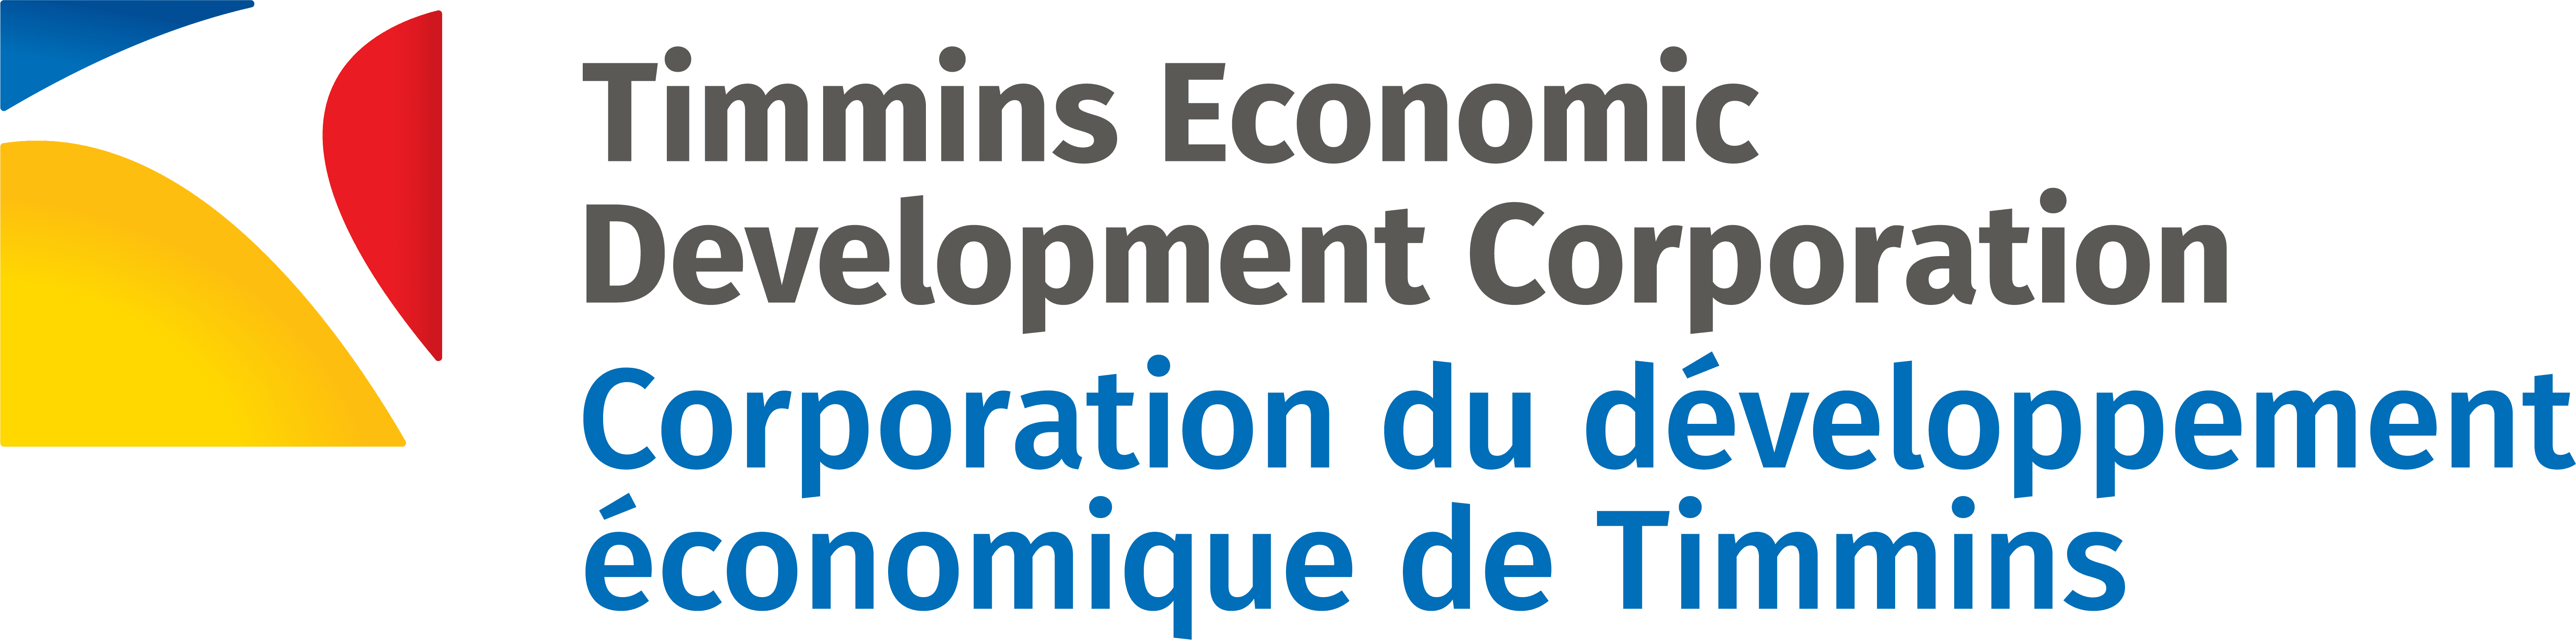 Timmins Economic Development Corporation